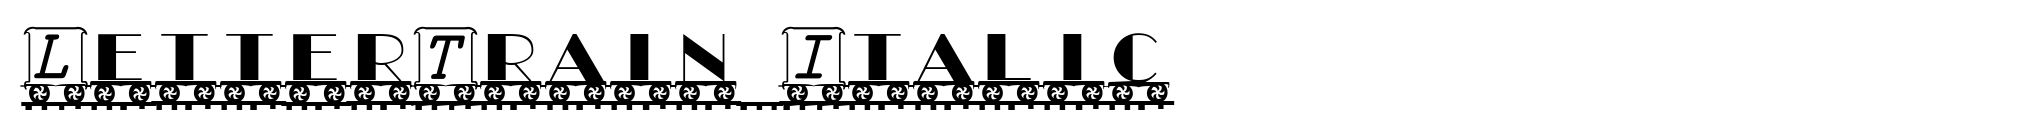 LetterTrain Italic image